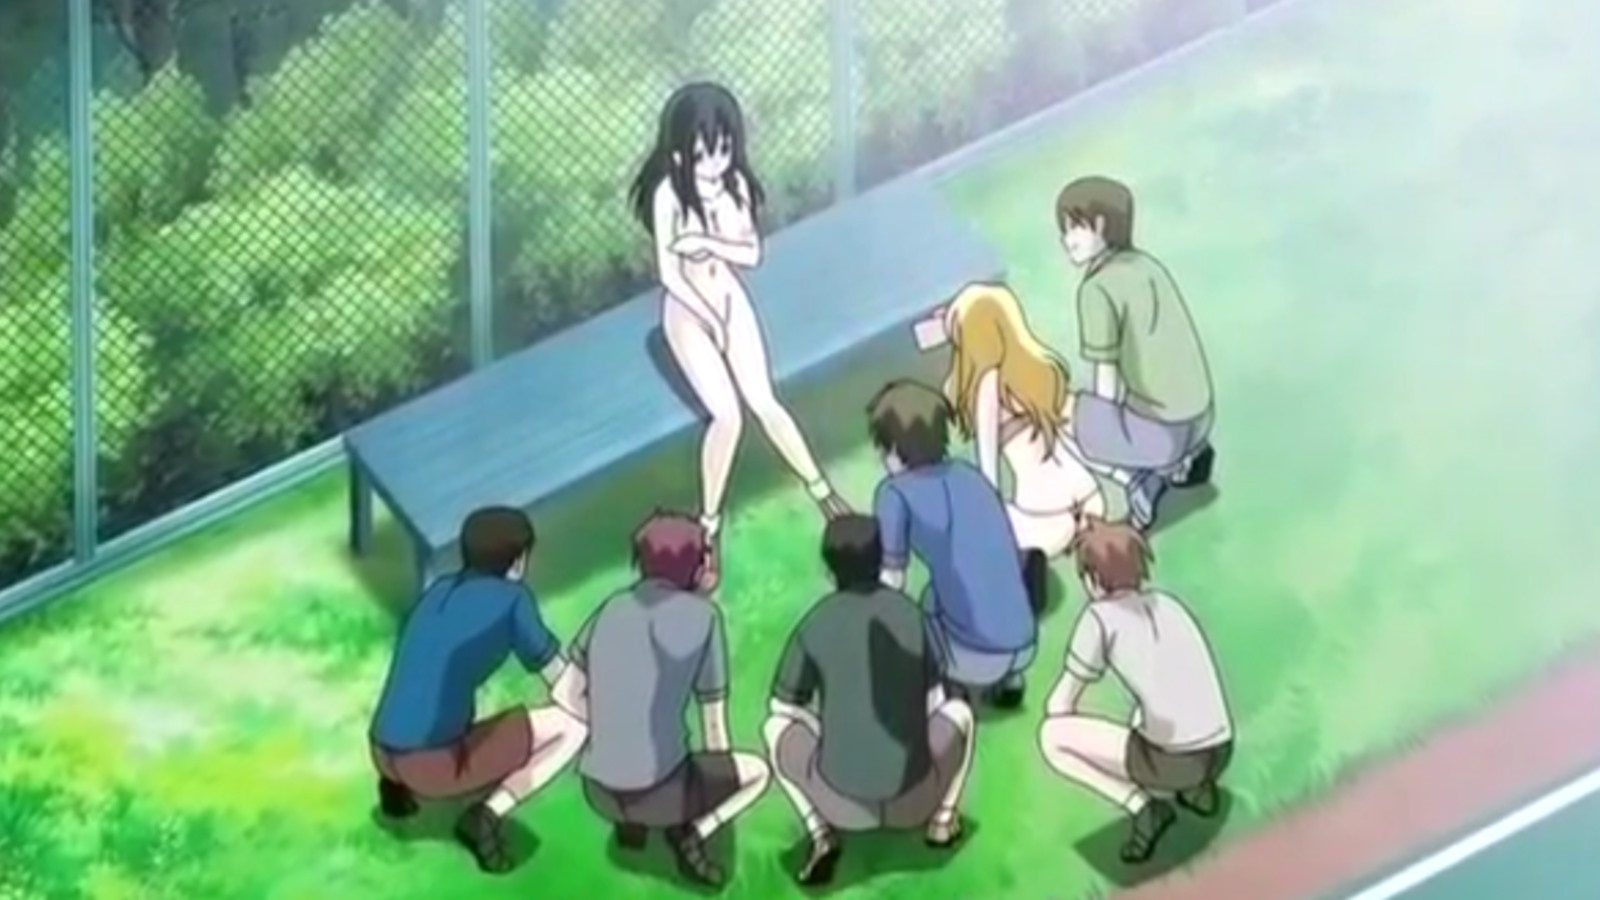 Nude anime strip